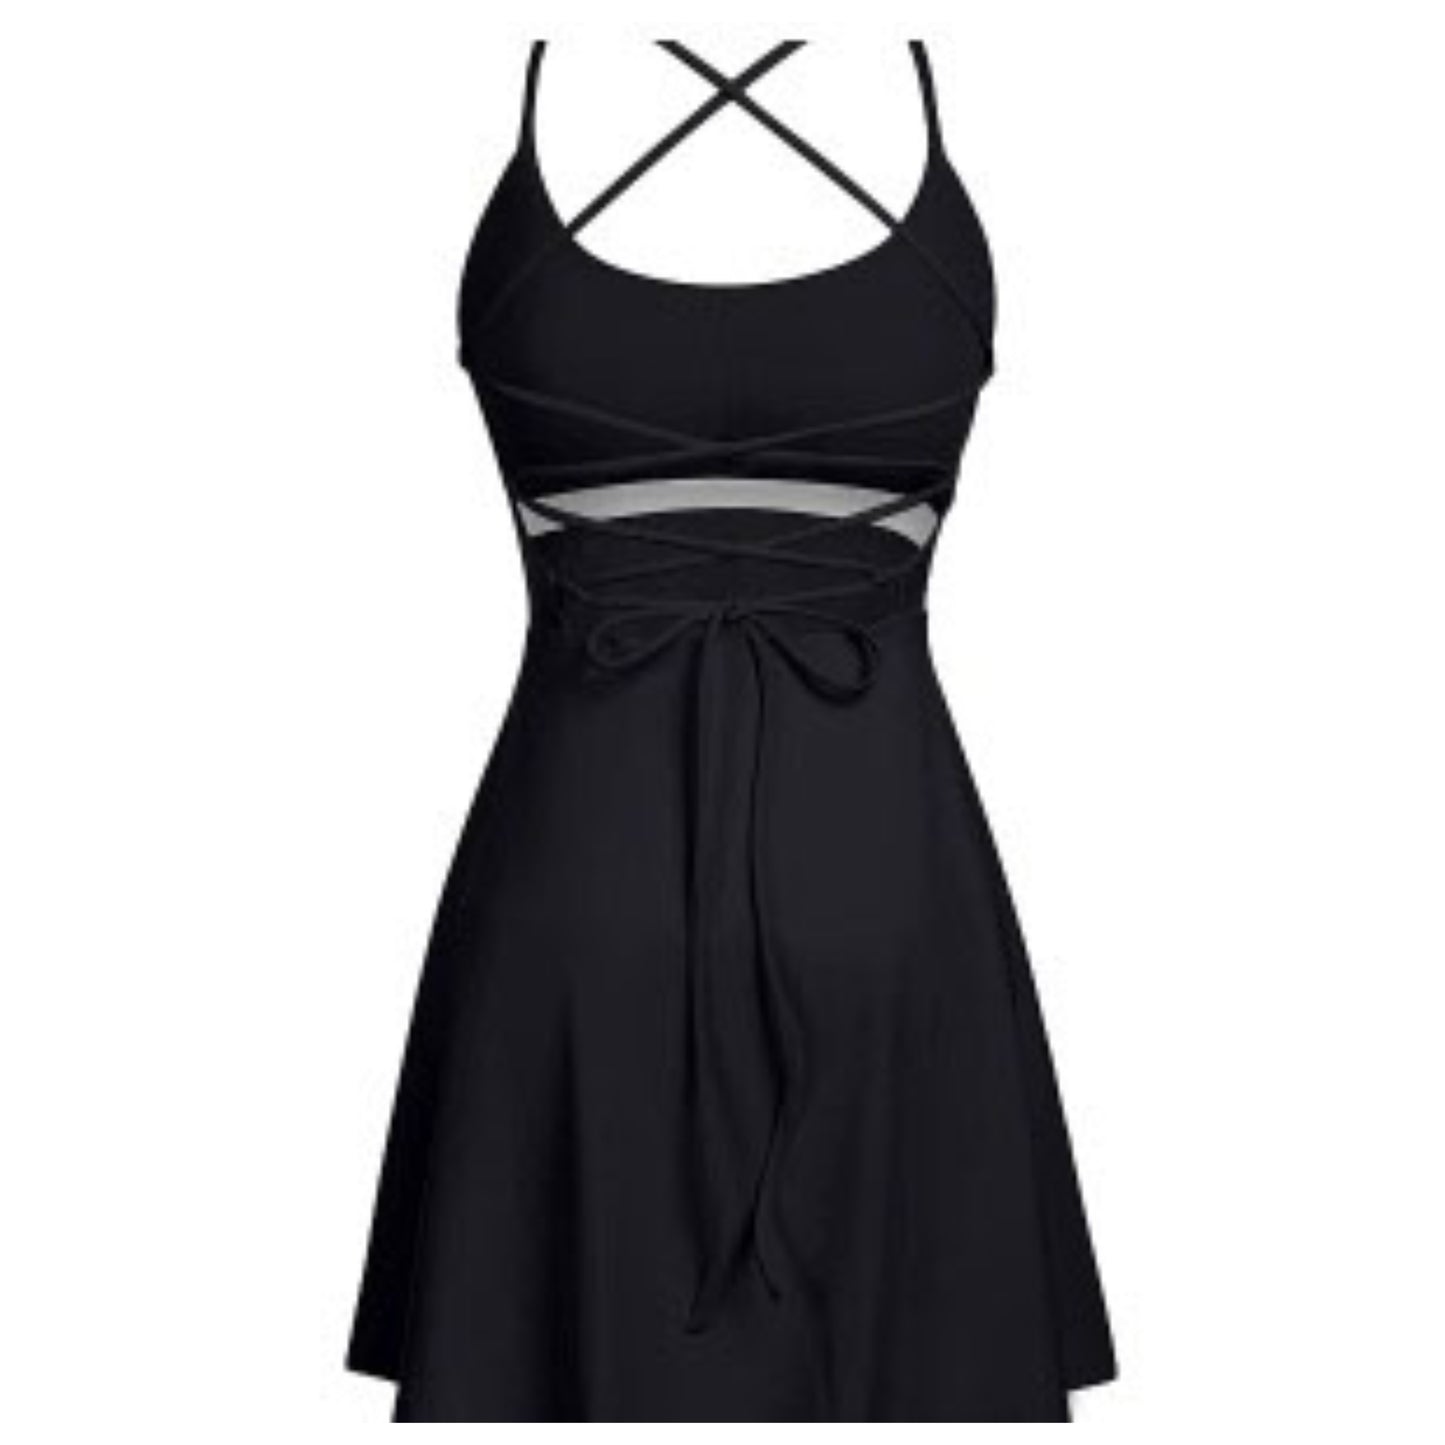 GoGlo Sport Womens Stylish Gym Outfit Black Dress